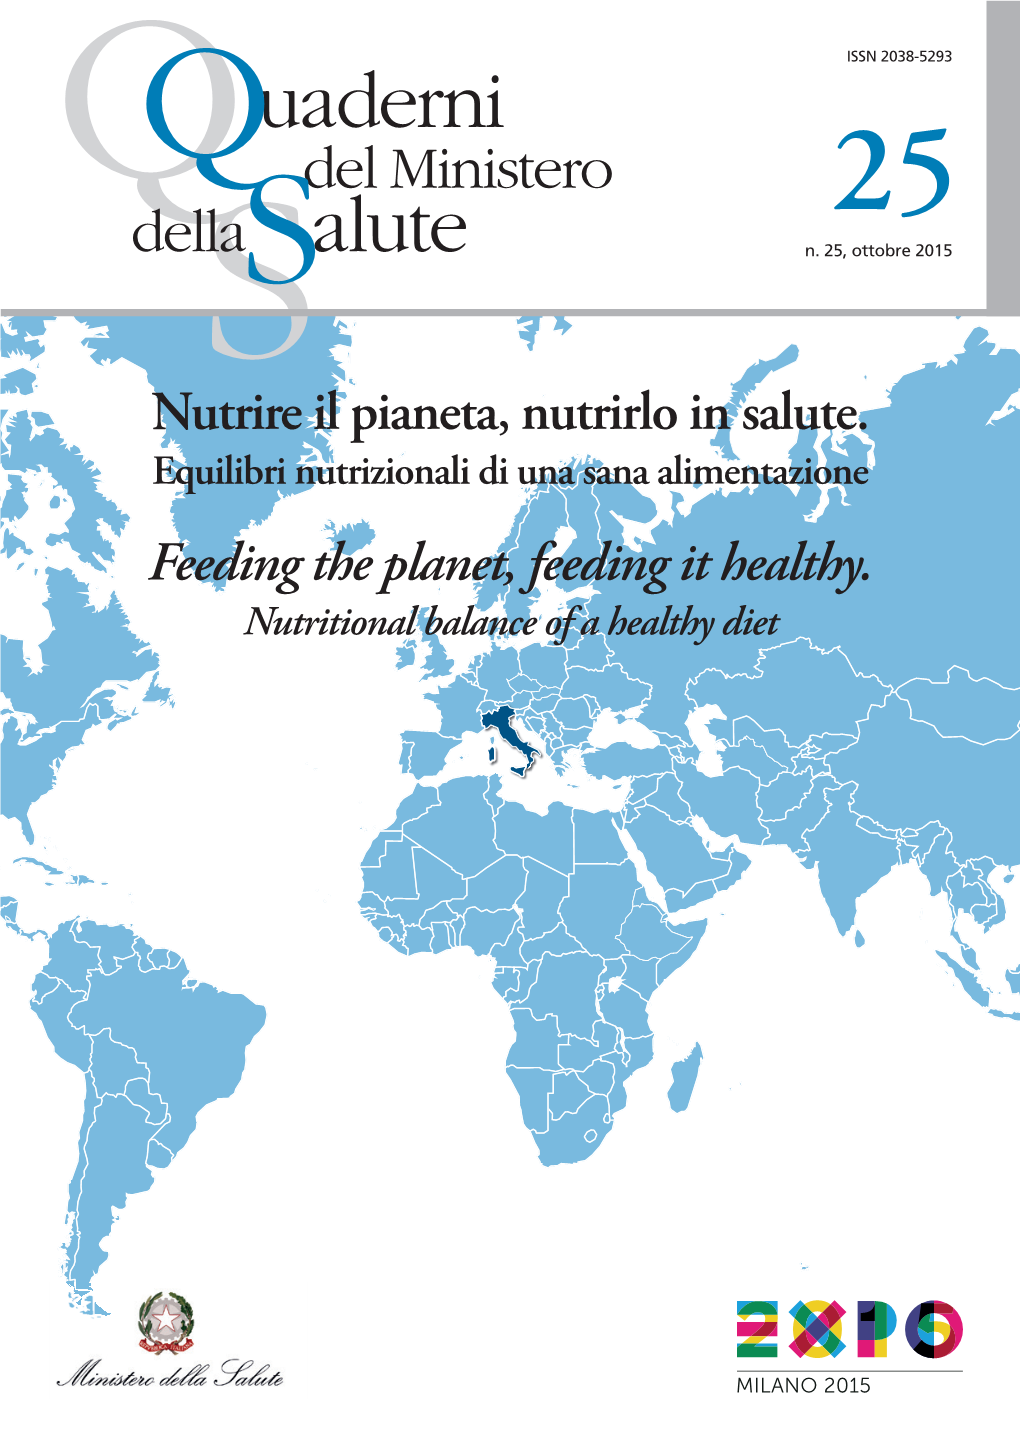 Nutrire Il Pianeta, Nutrirlo in Salute. Feeding the Planet, Feeding It Healthy